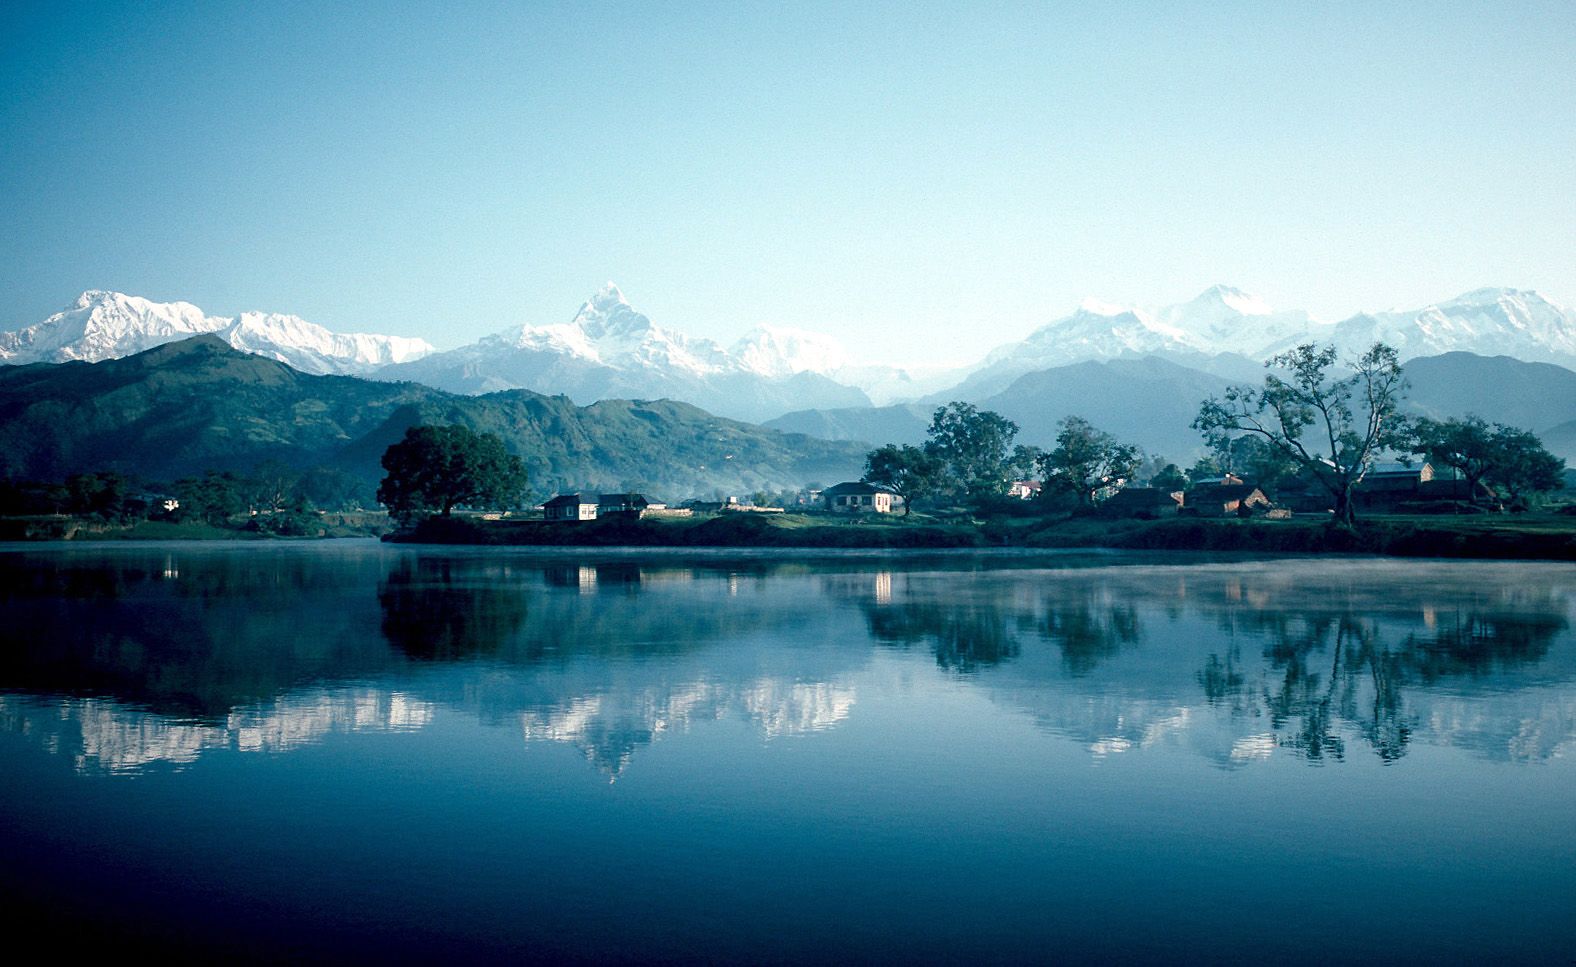 Pokhara_and_Phewa_Lake.jpg